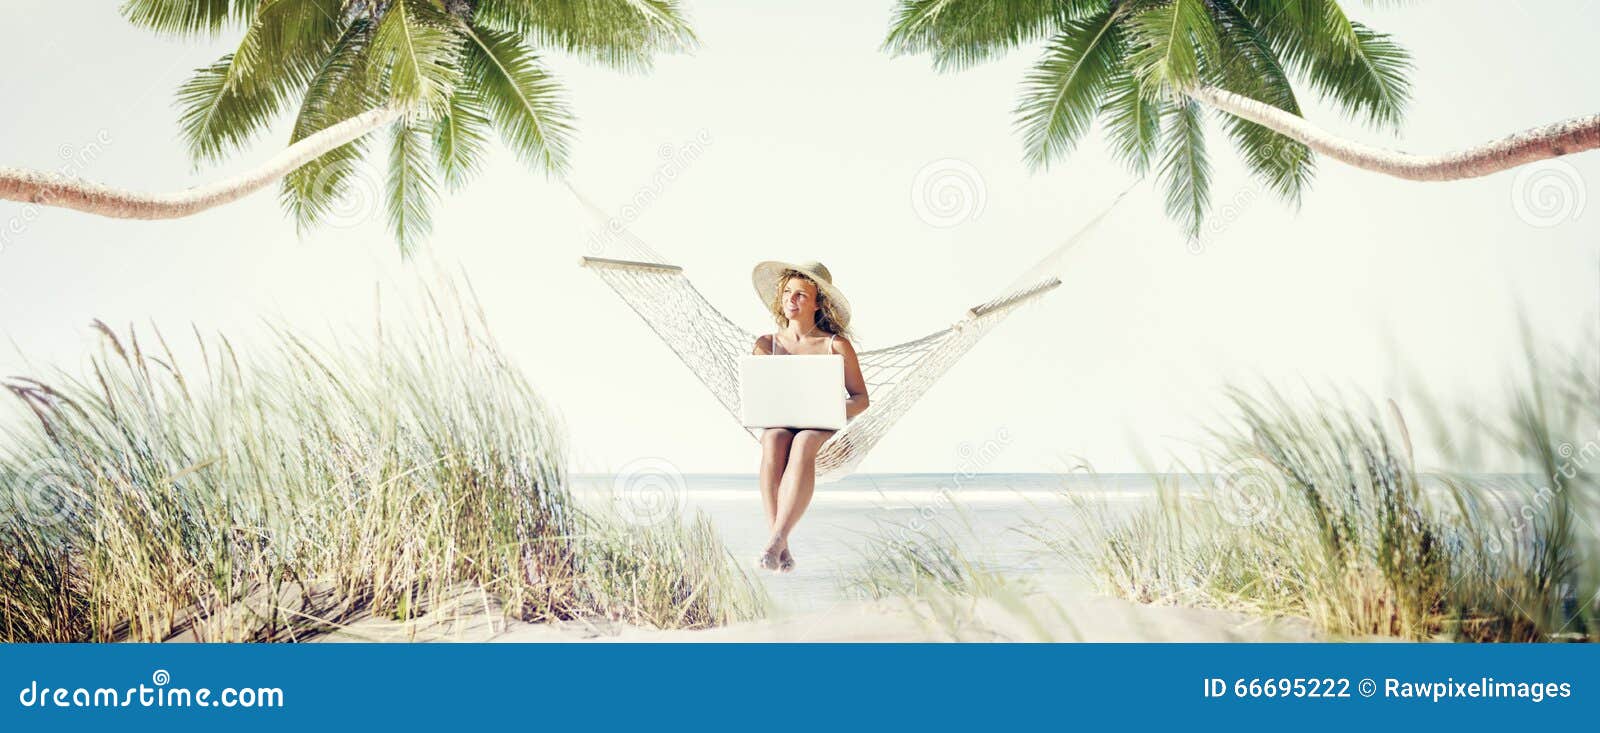 woman relaxation beach working enjoyment concept